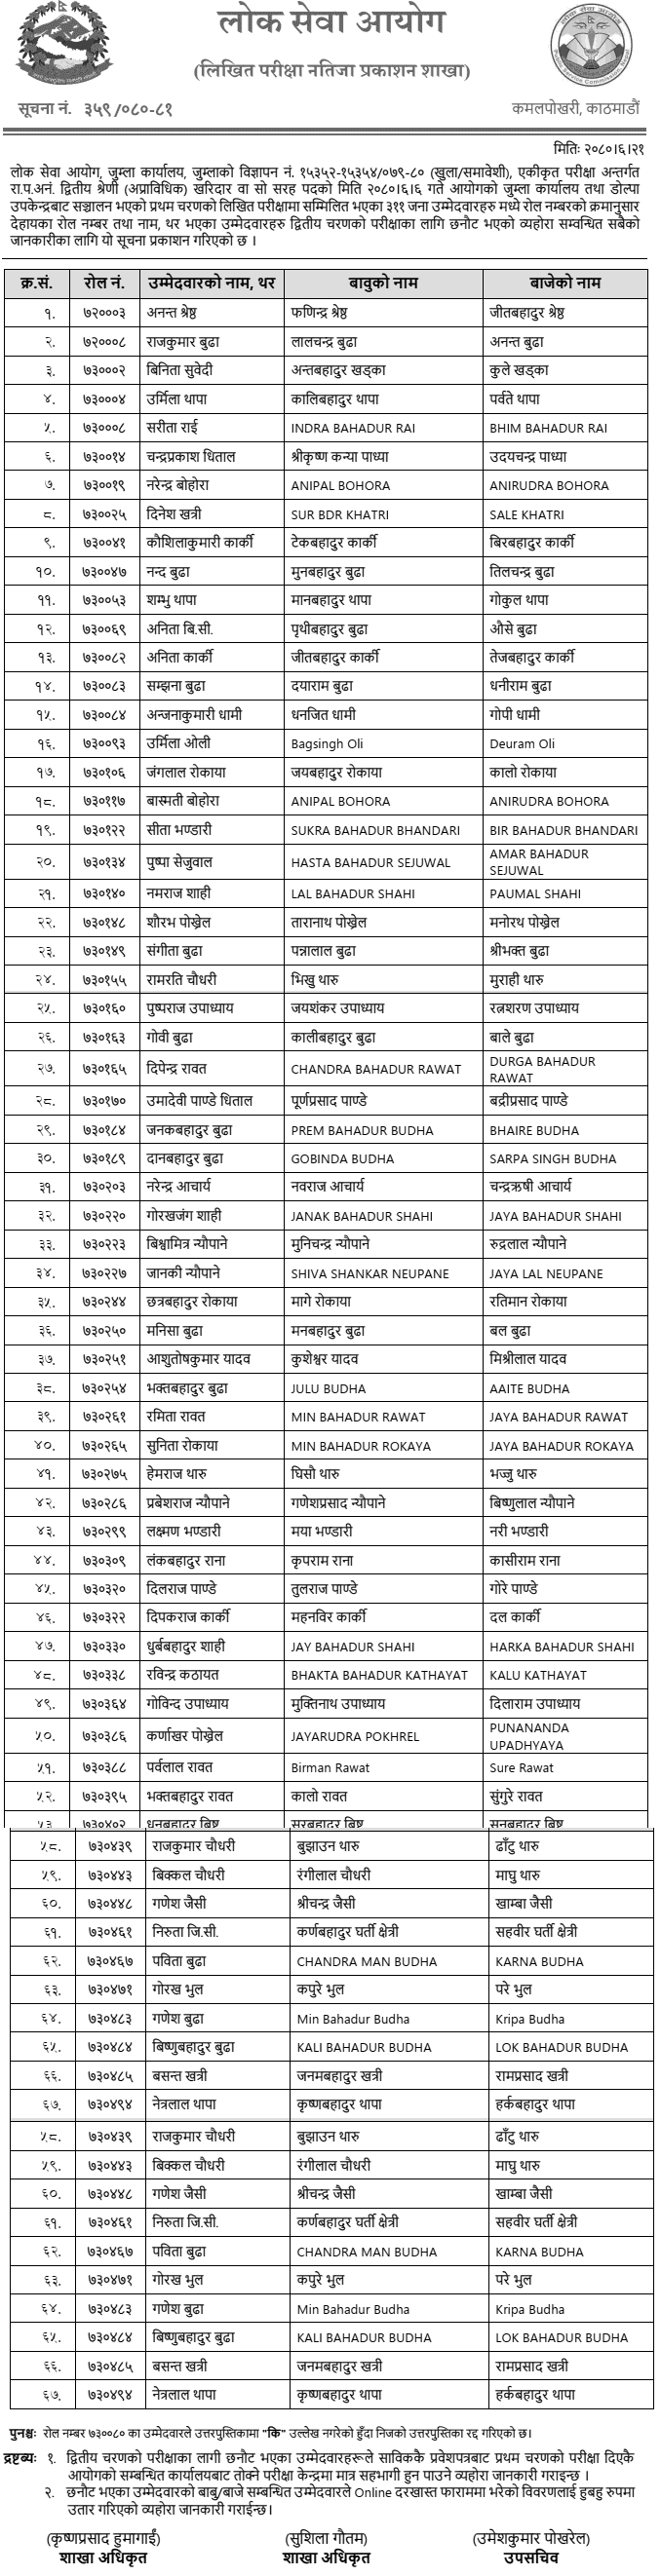 Lok Sewa Aayog Jumla, Dolpa 1st Phase Written Exam Result of Kharidar 2080